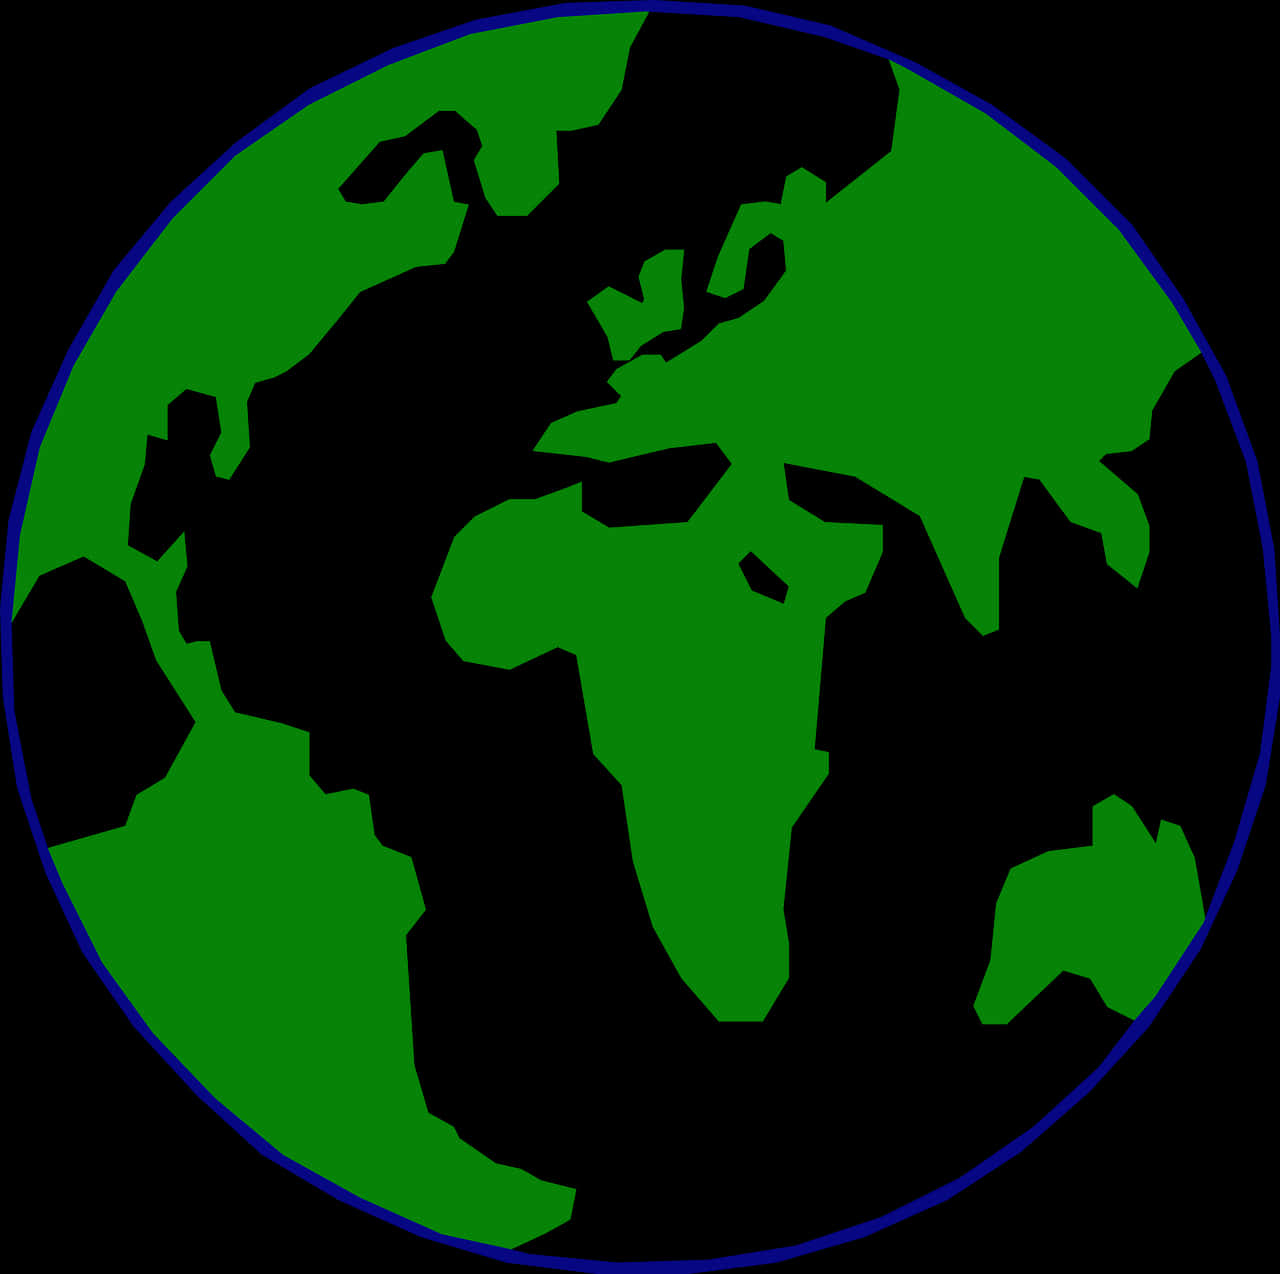 Stylized Green World Map PNG image